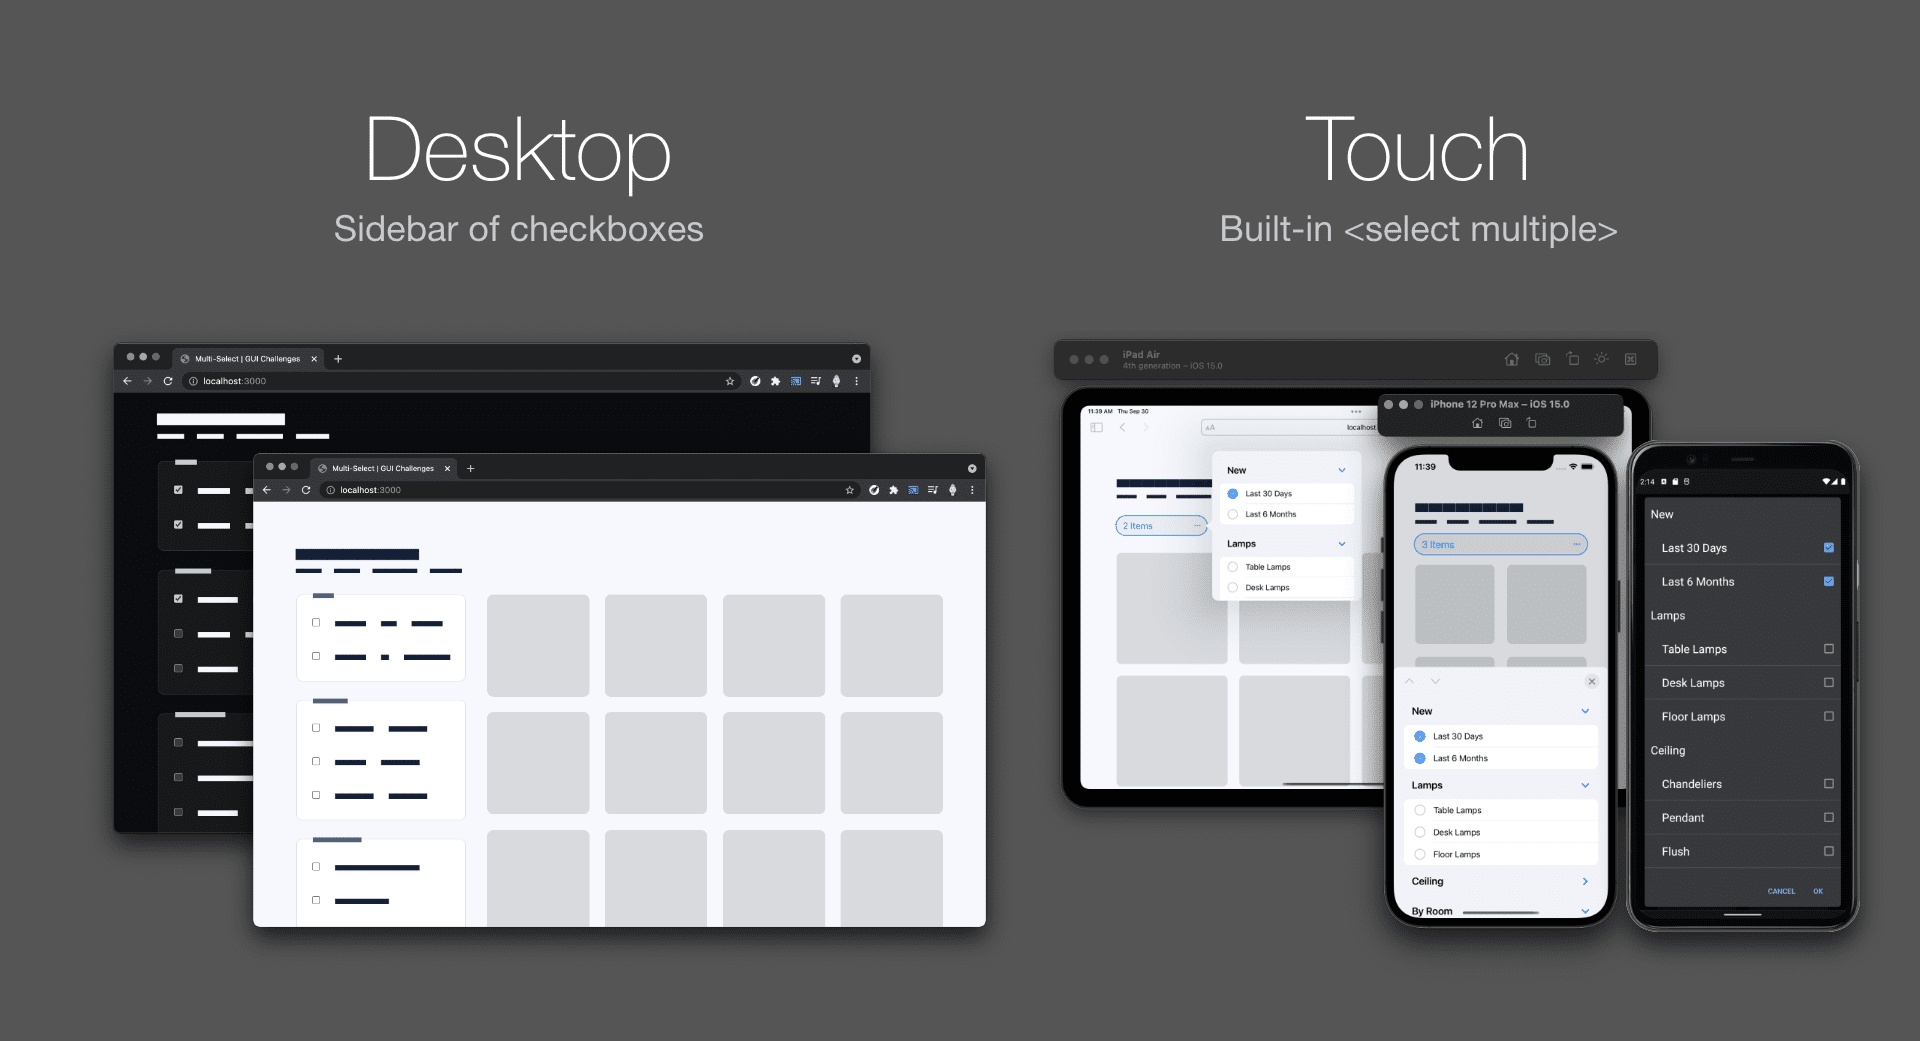 Screenshot perbandingan yang menampilkan terang dan gelap pada desktop dengan sidebar
kotak centang vs. iOS dan Android seluler dengan elemen multi-pilihan.